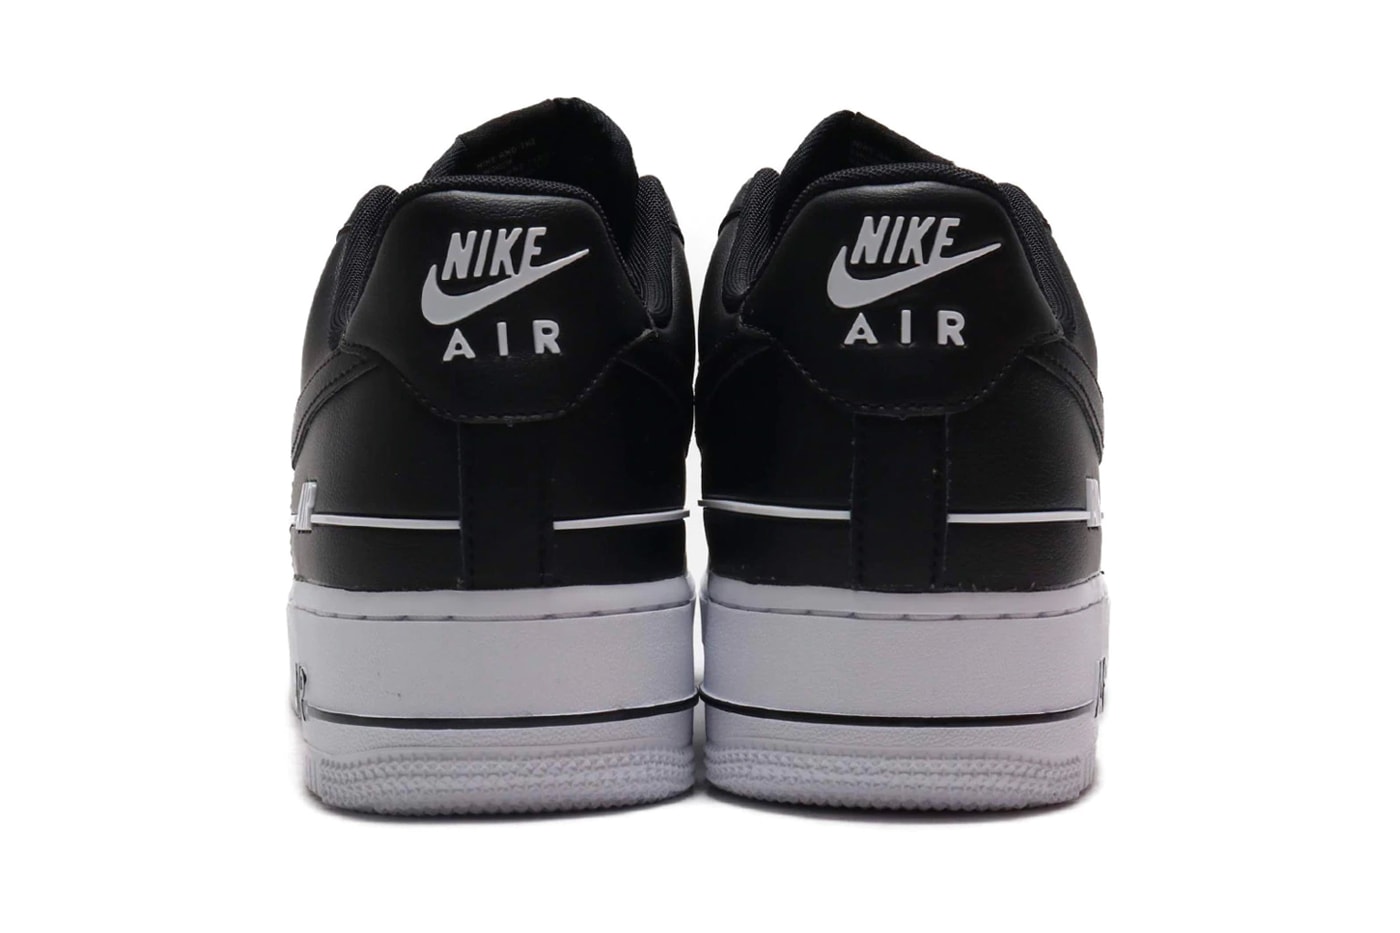 Nike Air Force 1 07 LV8 3 Black White menswear streetwear spring summer 2020 collection footwear shoes sneakers trainers runners swoosh kicks cj1379 001 af1